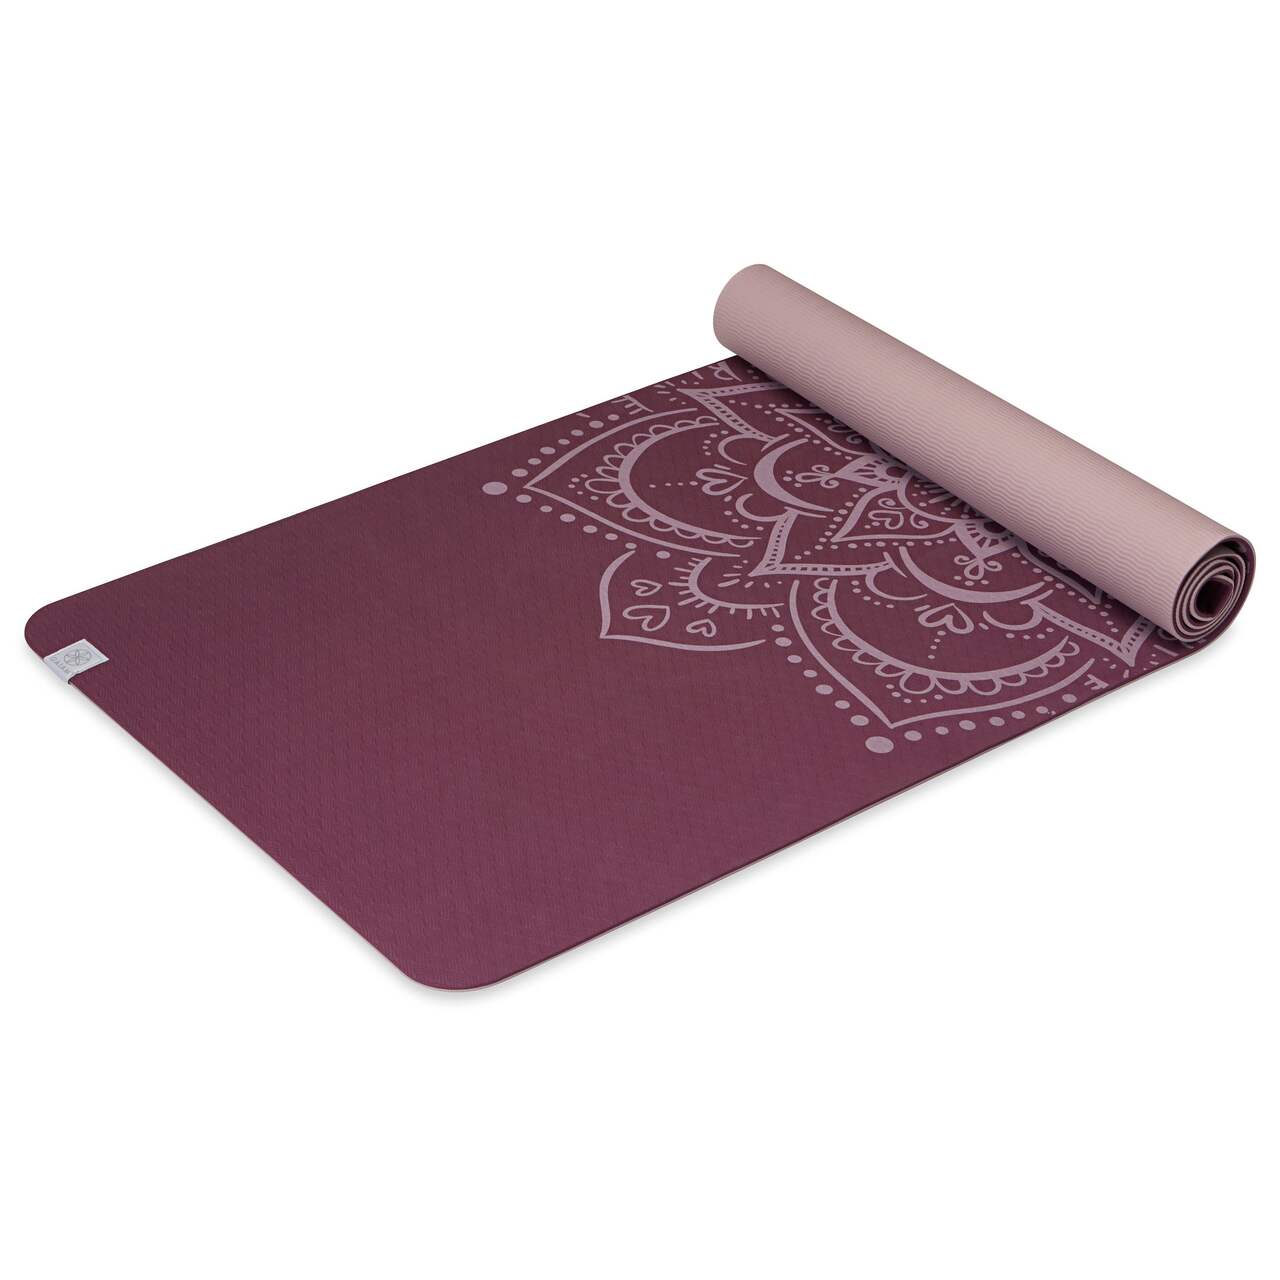 Gaiam Performance - Tapis de yoga imprimé en TPE, rose fard, 6 mm